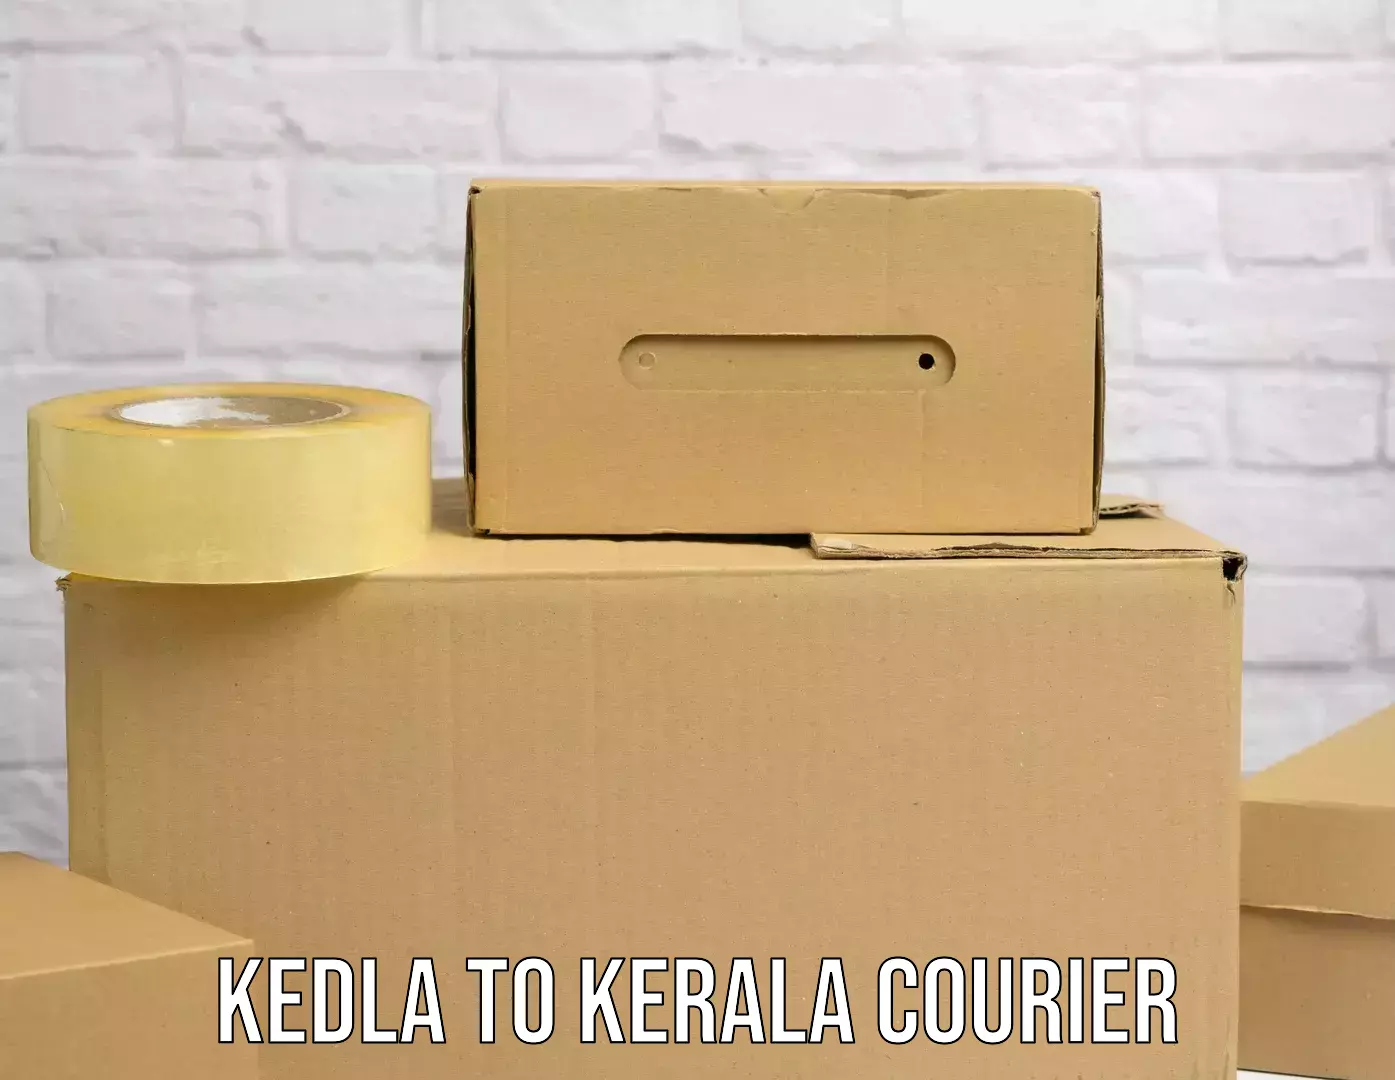 Seamless shipping service Kedla to Ponekkara